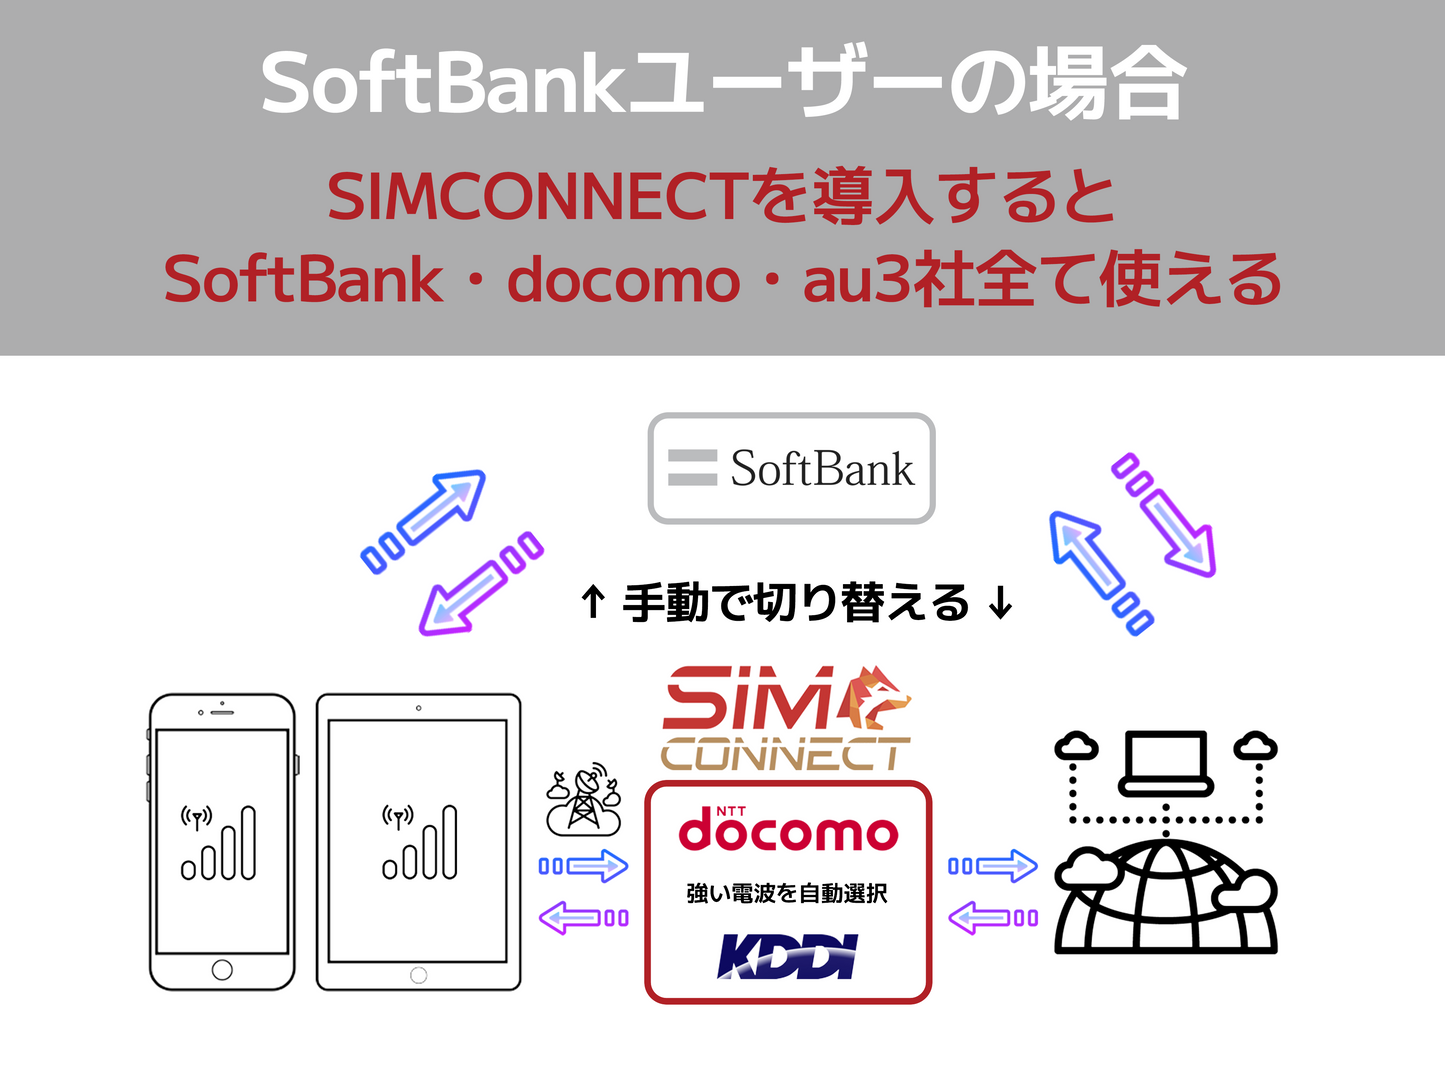 SIMCONNECTライトプラン（1GB）